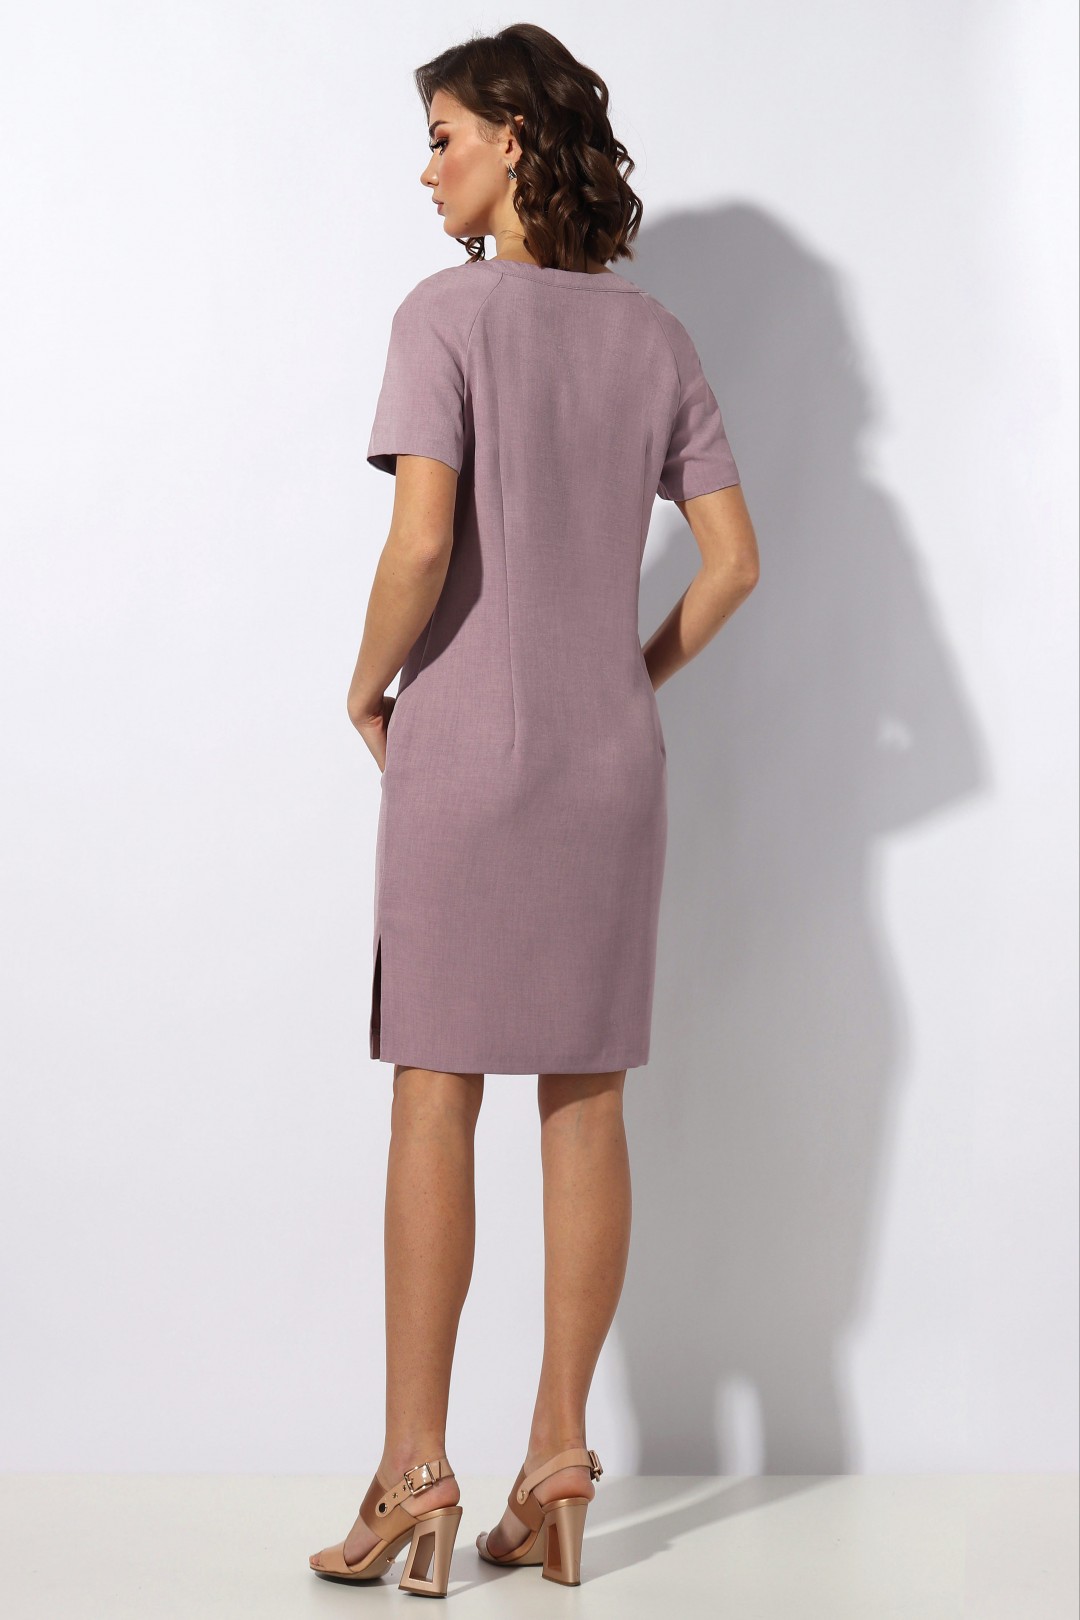 Платье МиА-Мода 1141-5